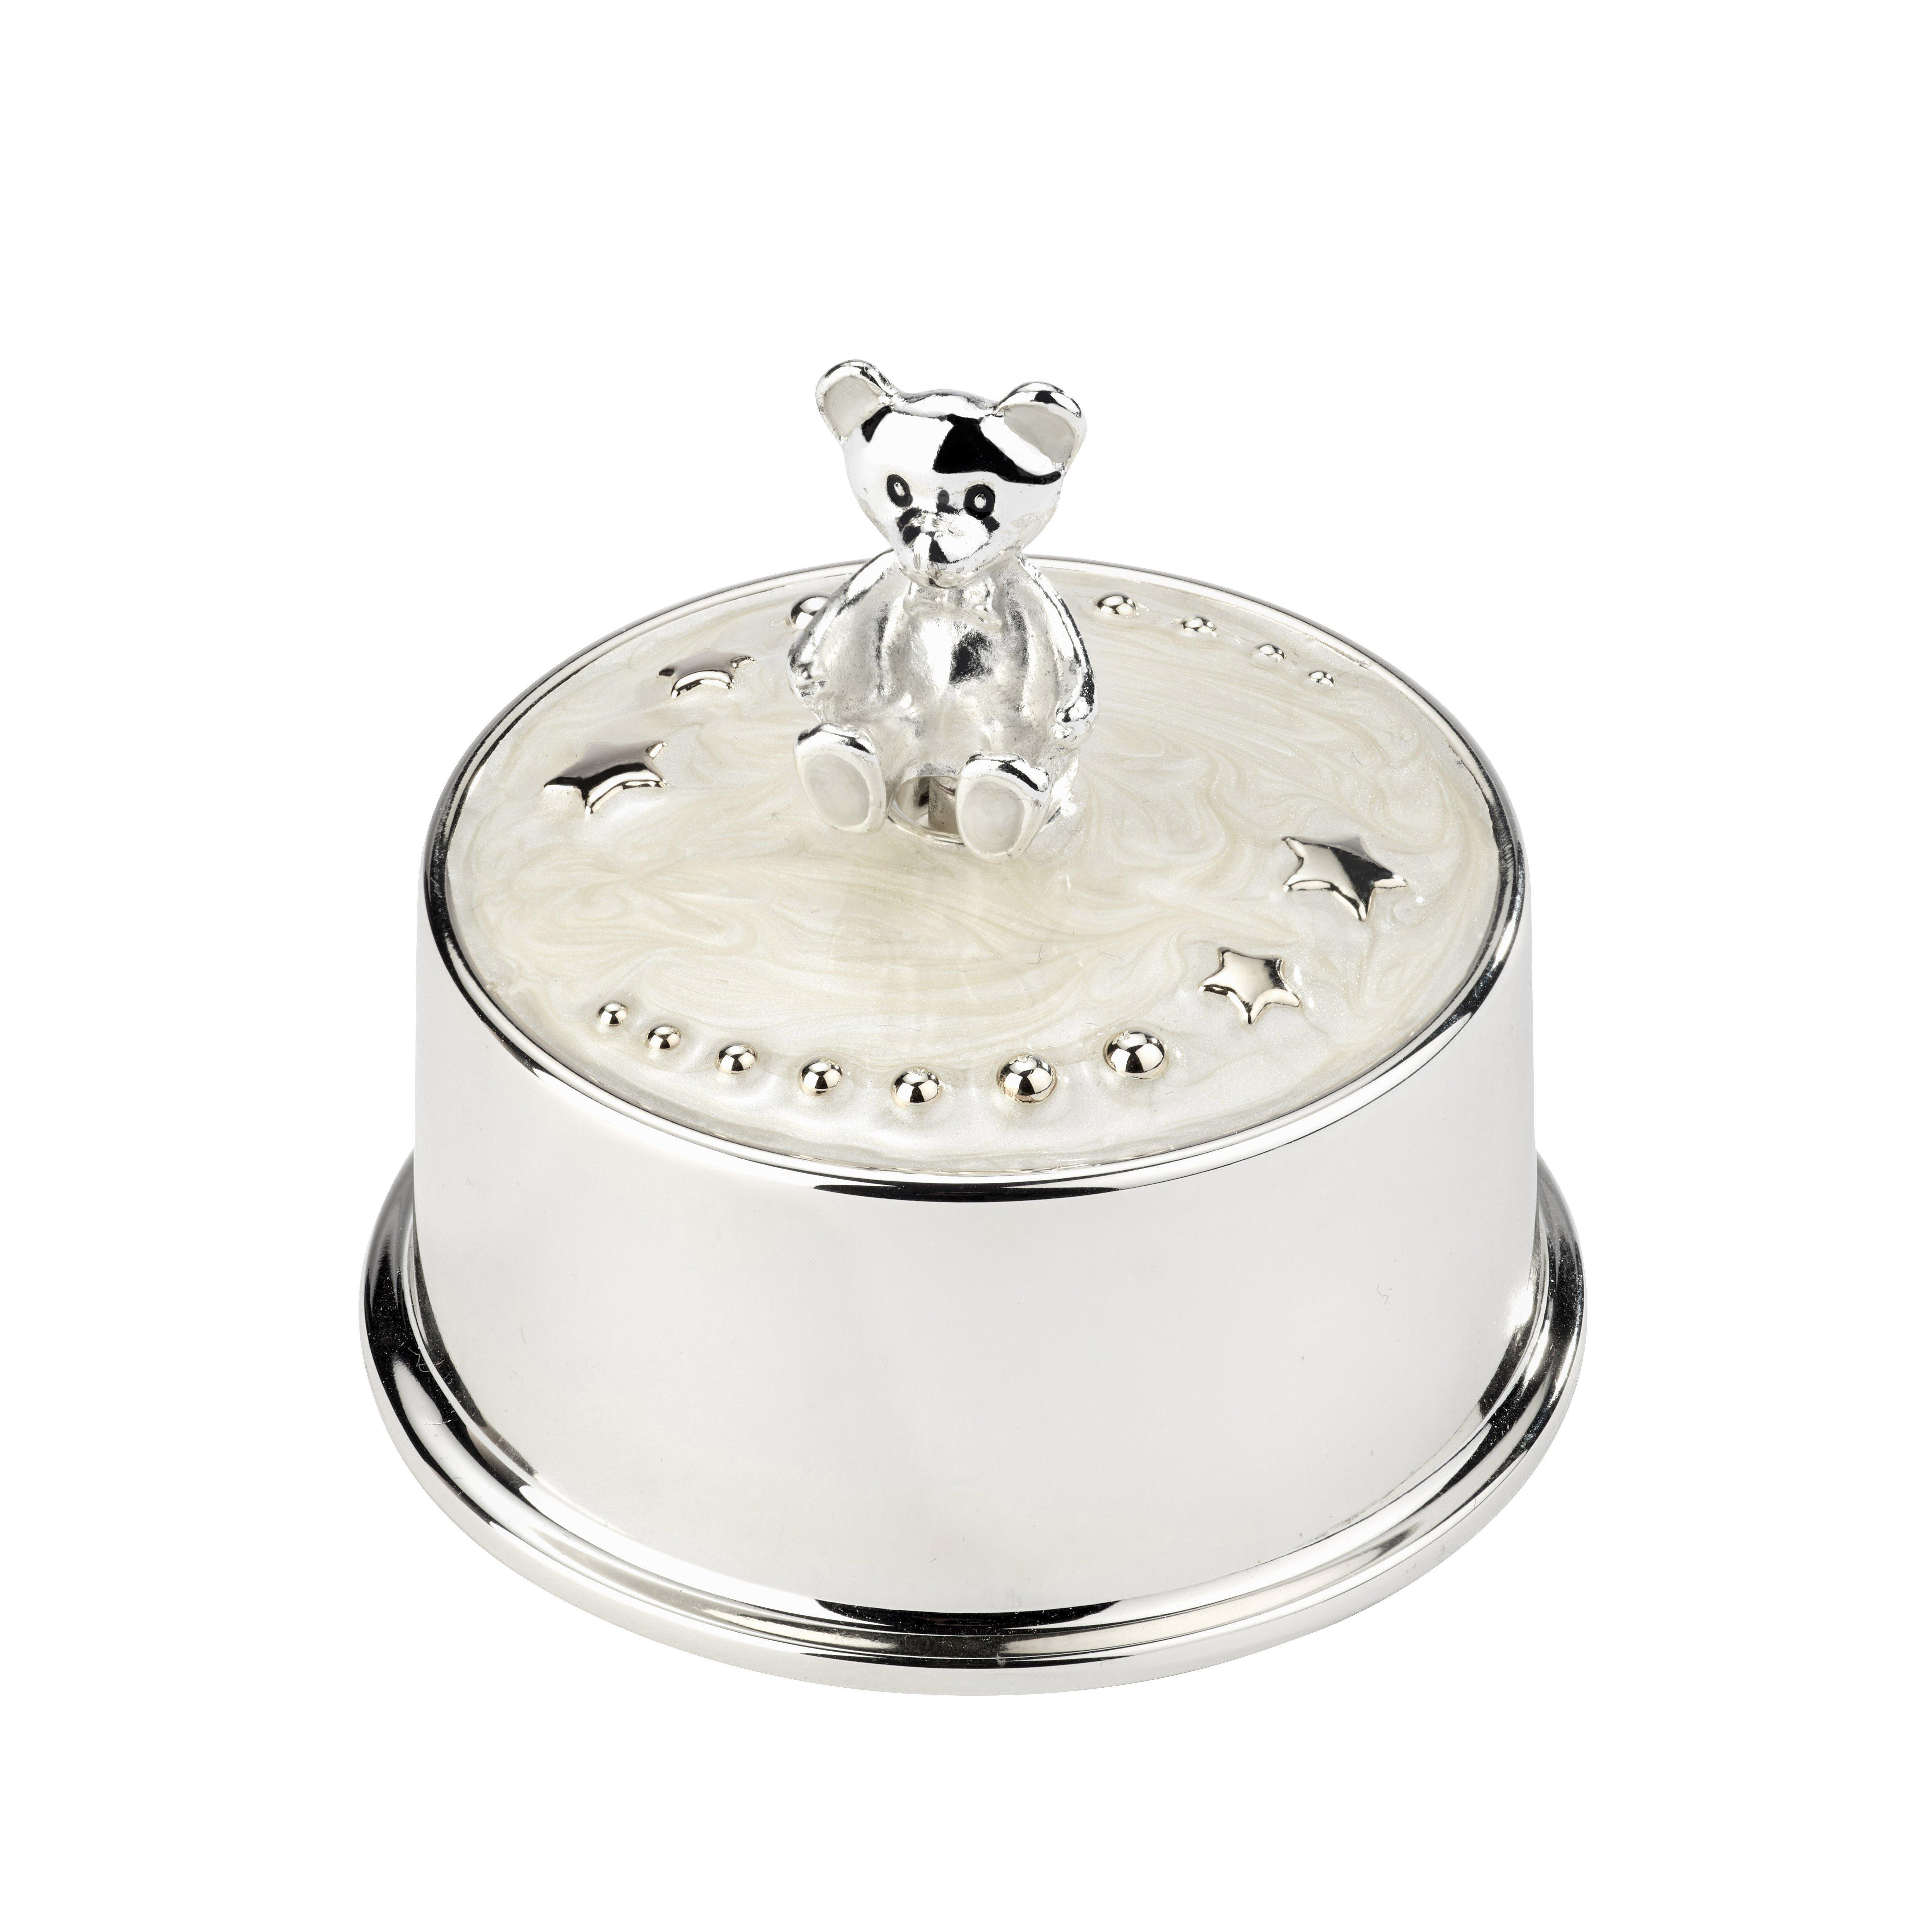 Bambino 'Teddy Bear' Silver Plated Music Box Luxury Children's Gift - image 1